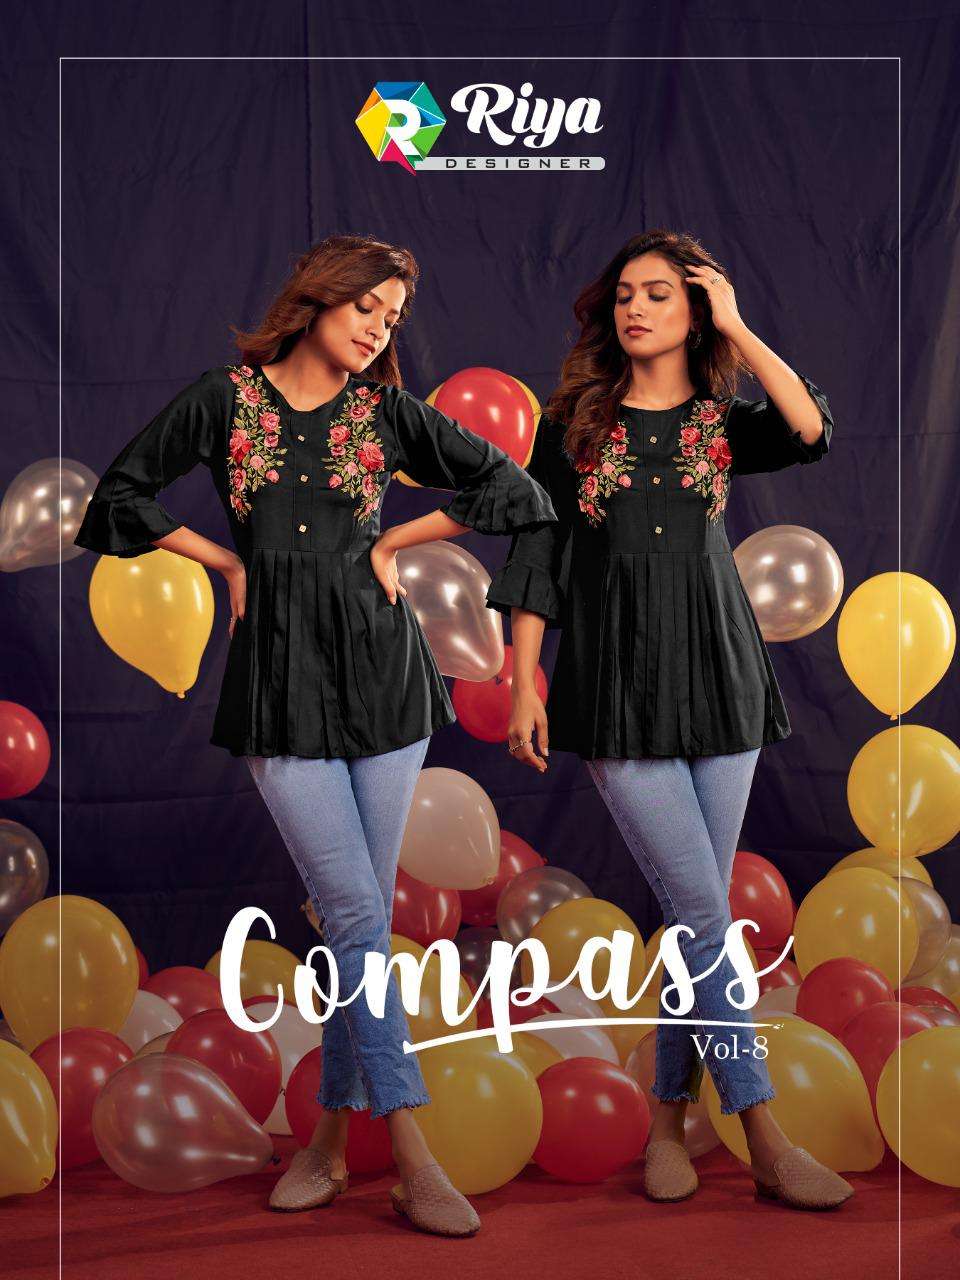 Riya Compass Vol 8 Rayon Embroidery Ladies Short Tops Supplier